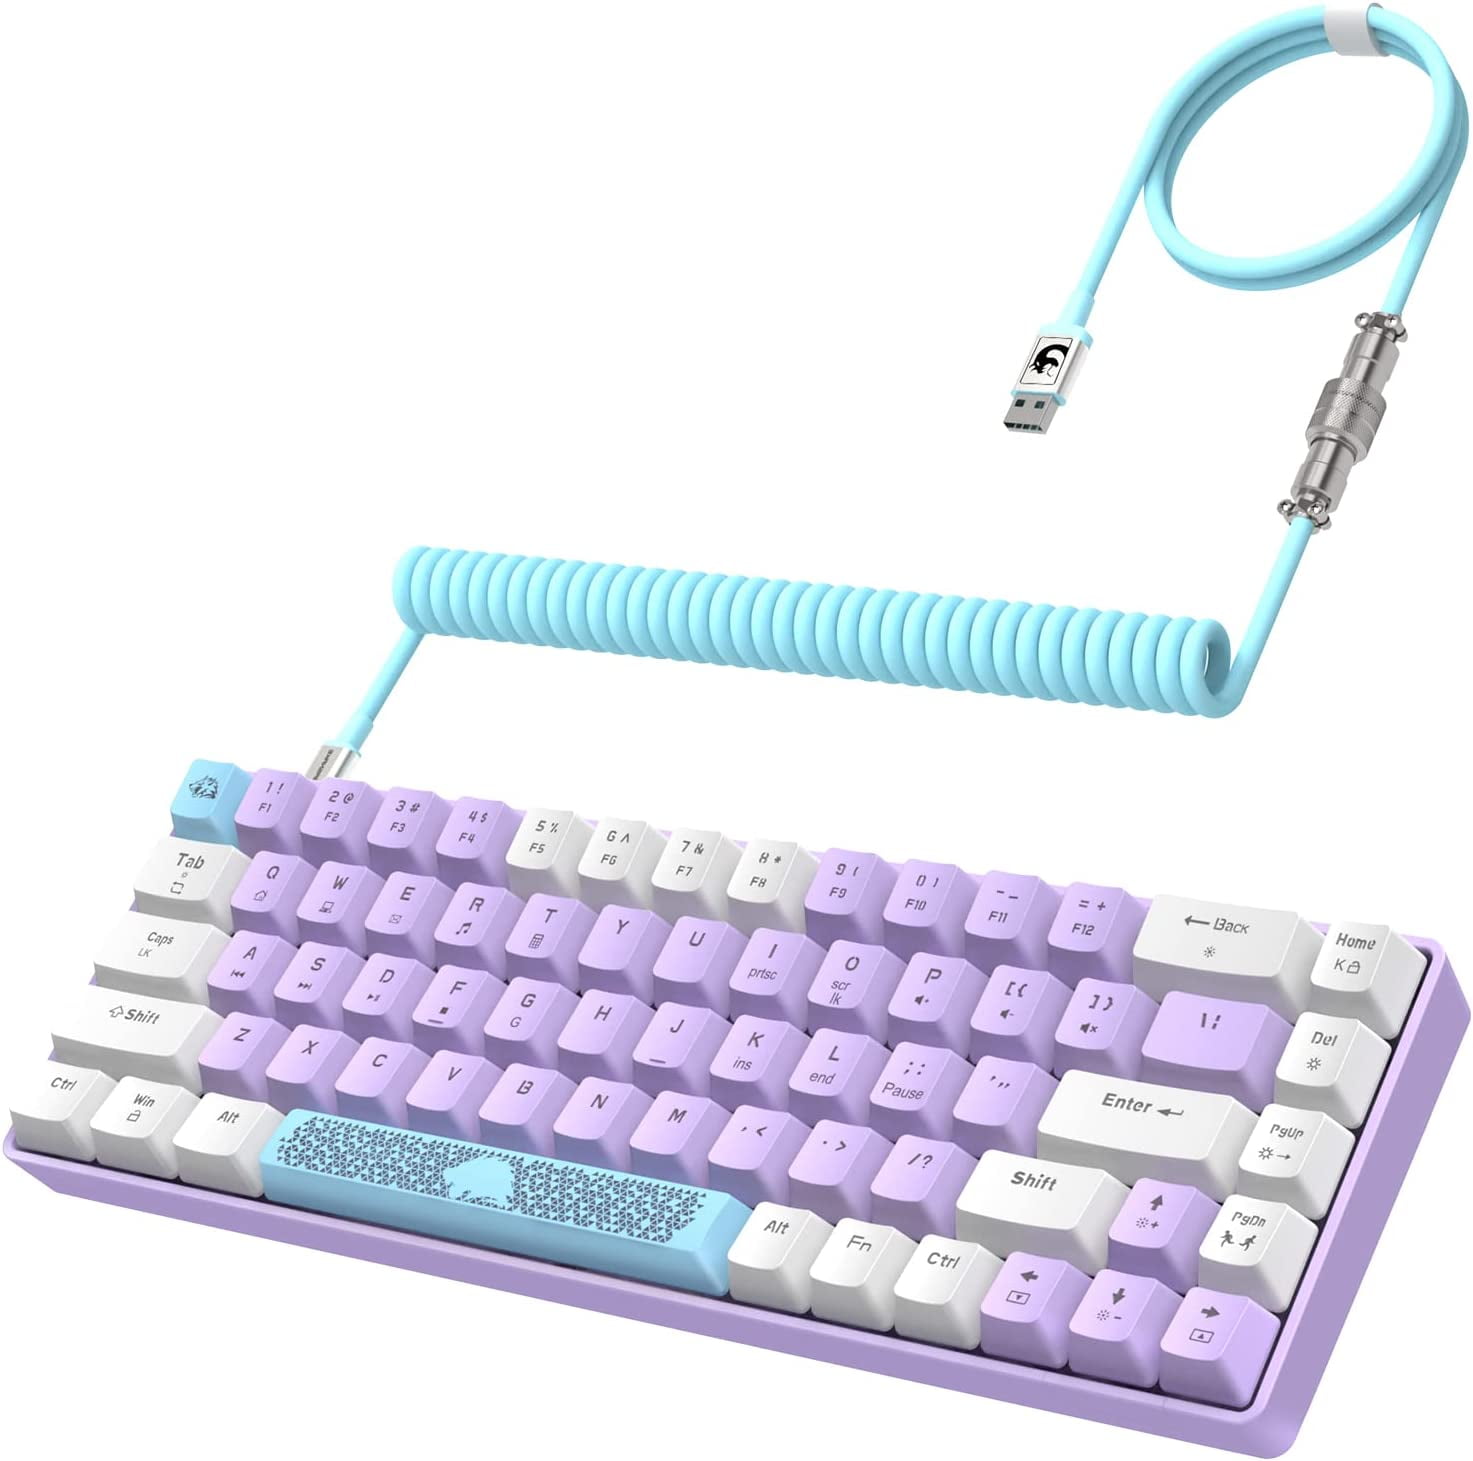 T8 60% Gaming Keyboard,68 Keys Compact Mini Wired Mechanical